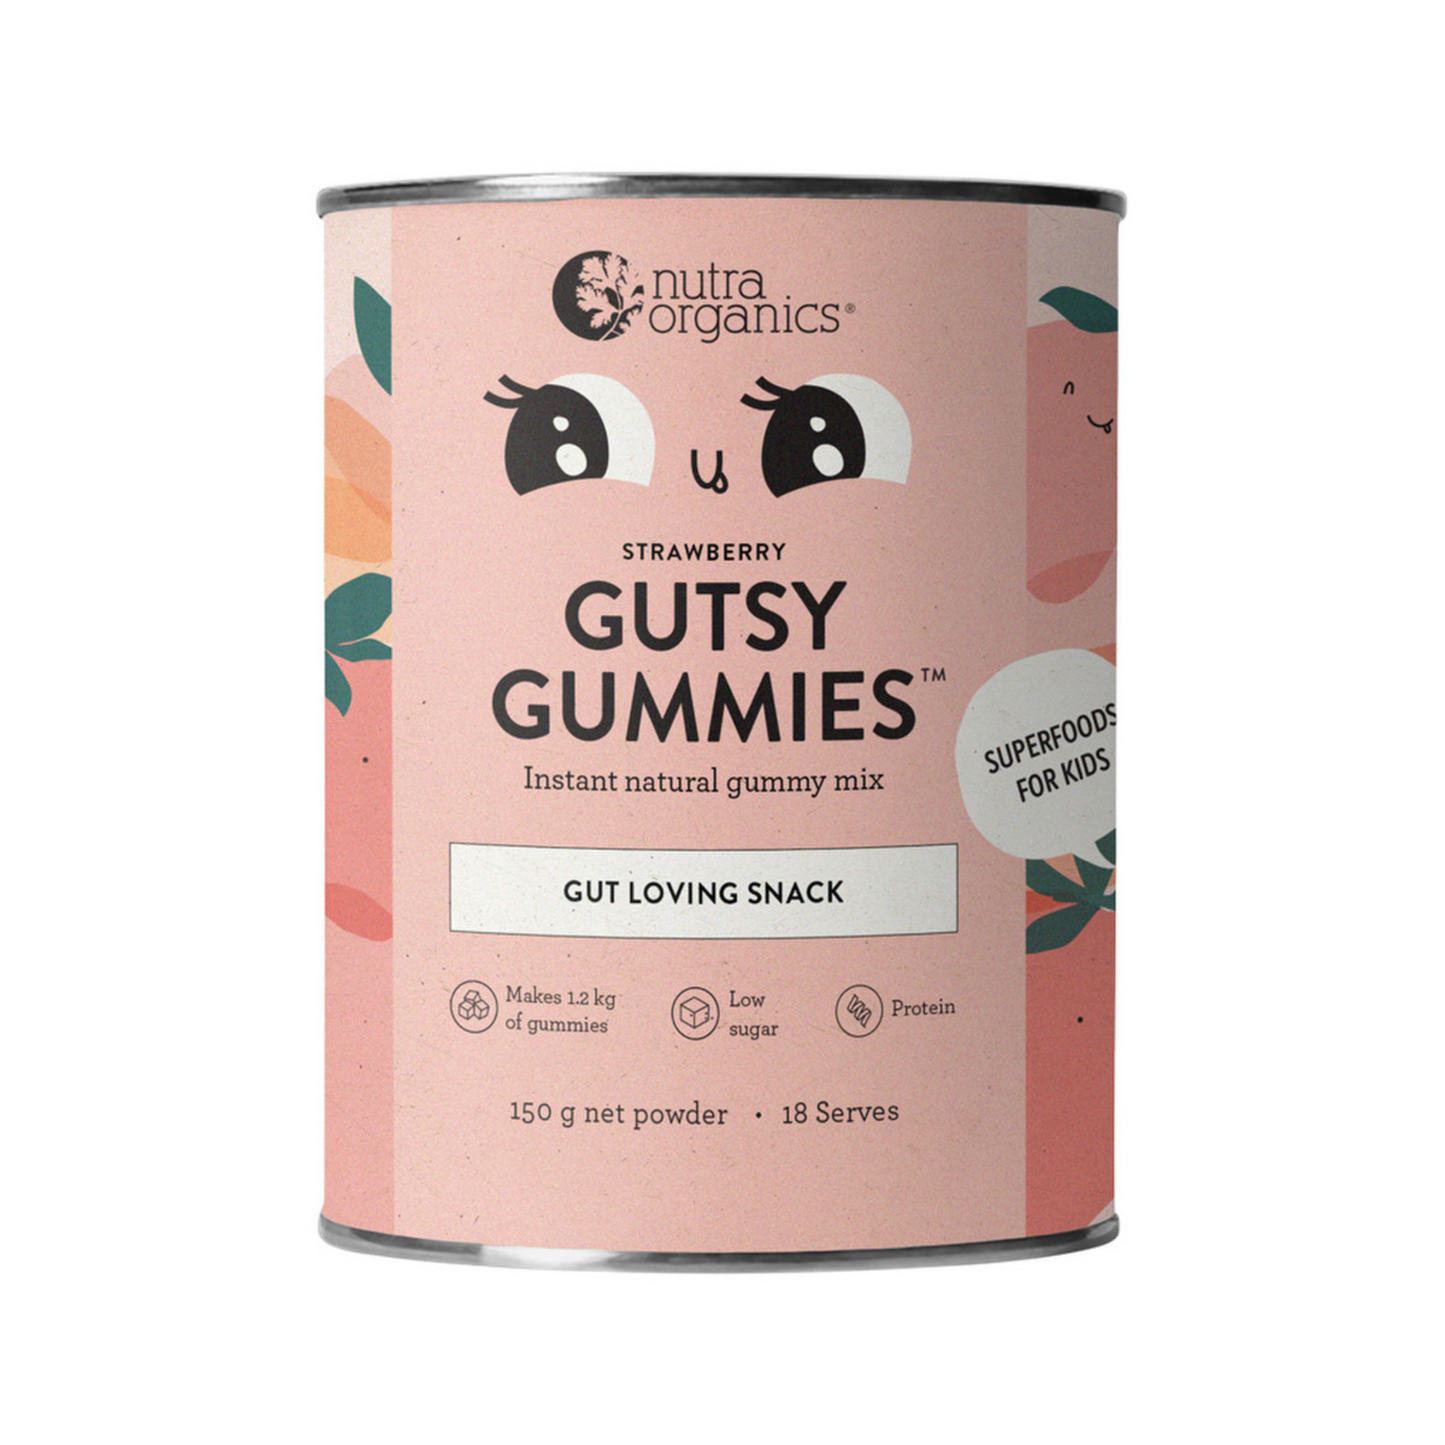 Nutra Organics Gutsy Gummies 150g, Blueberry, Mango Or Strawberry Flavour